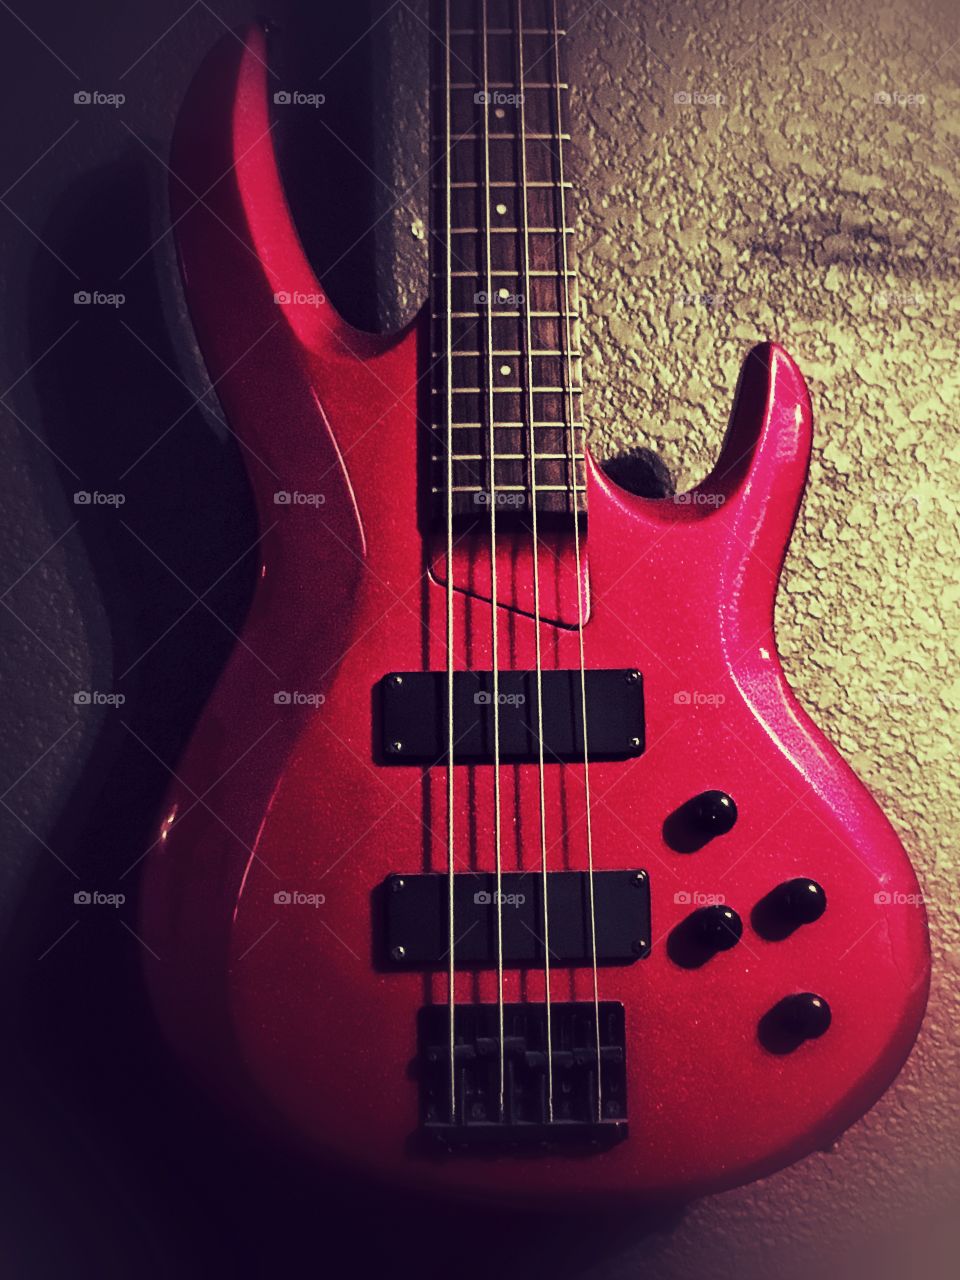 ESP 
Bass guitar
4 string